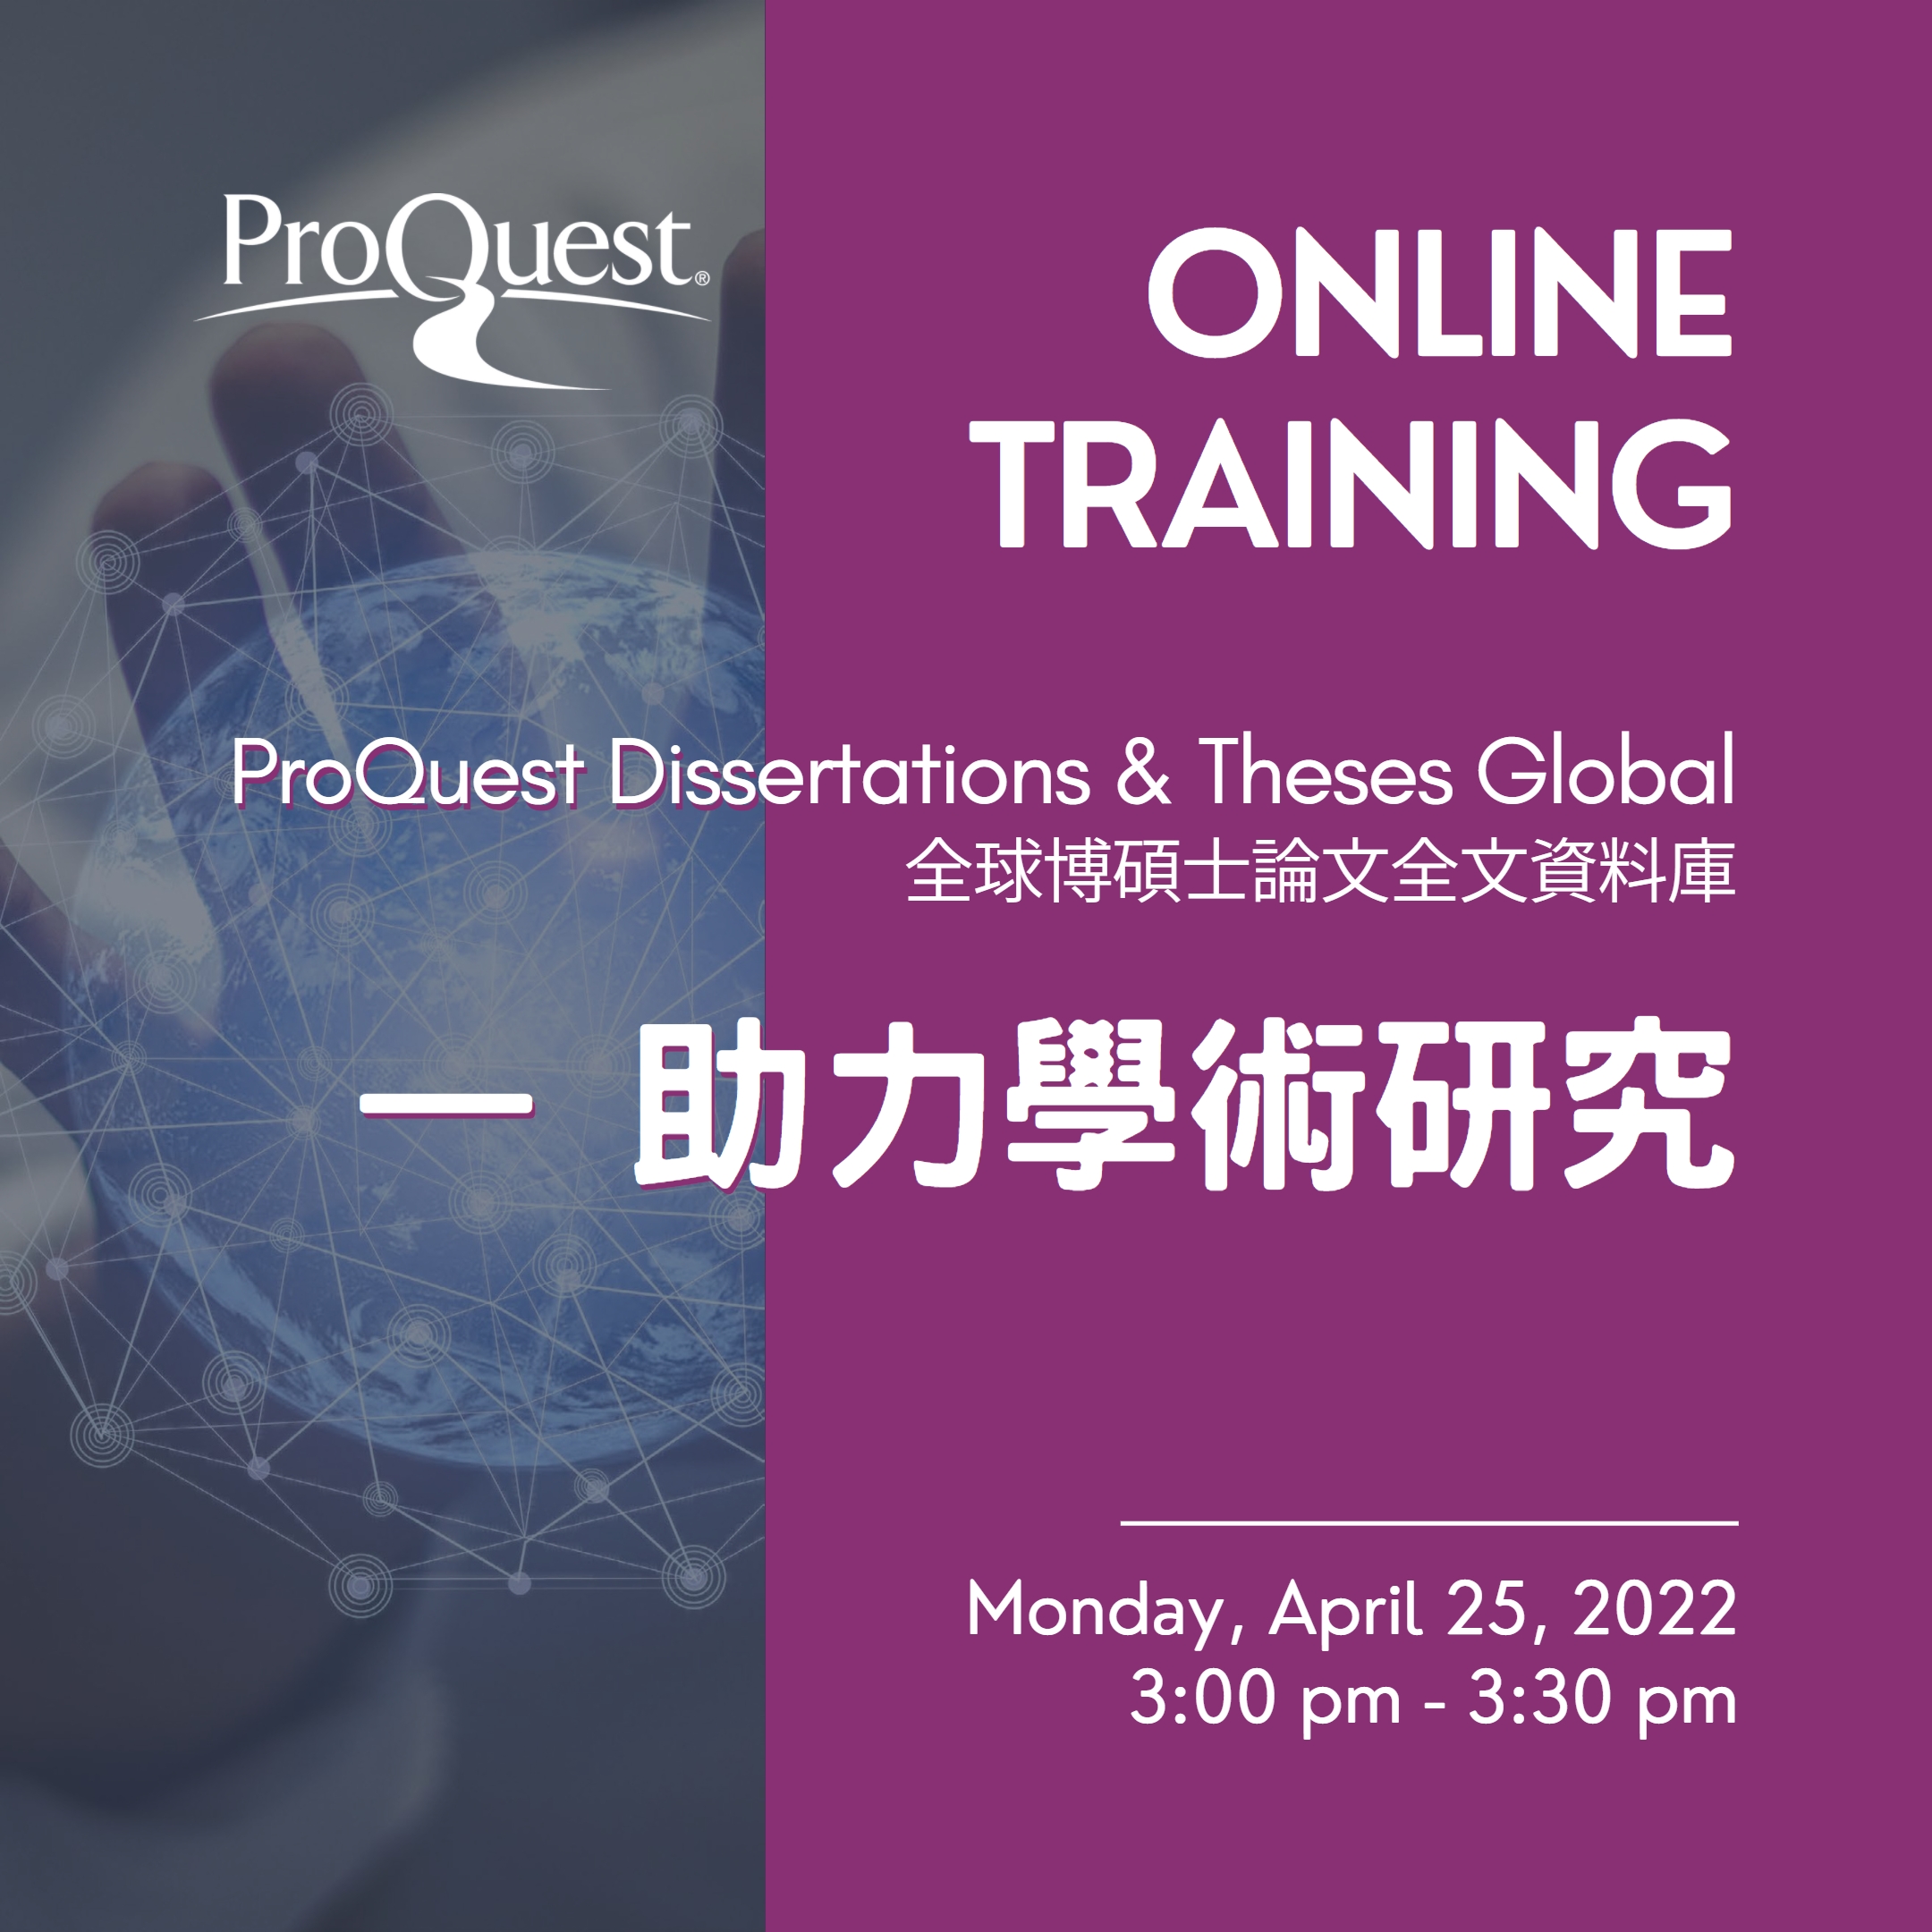 PROQUEST ONLINE TRAINING: ProQuest Dissertations & Theses Global 全球博碩士論文全文資料庫 — 助力學術研究